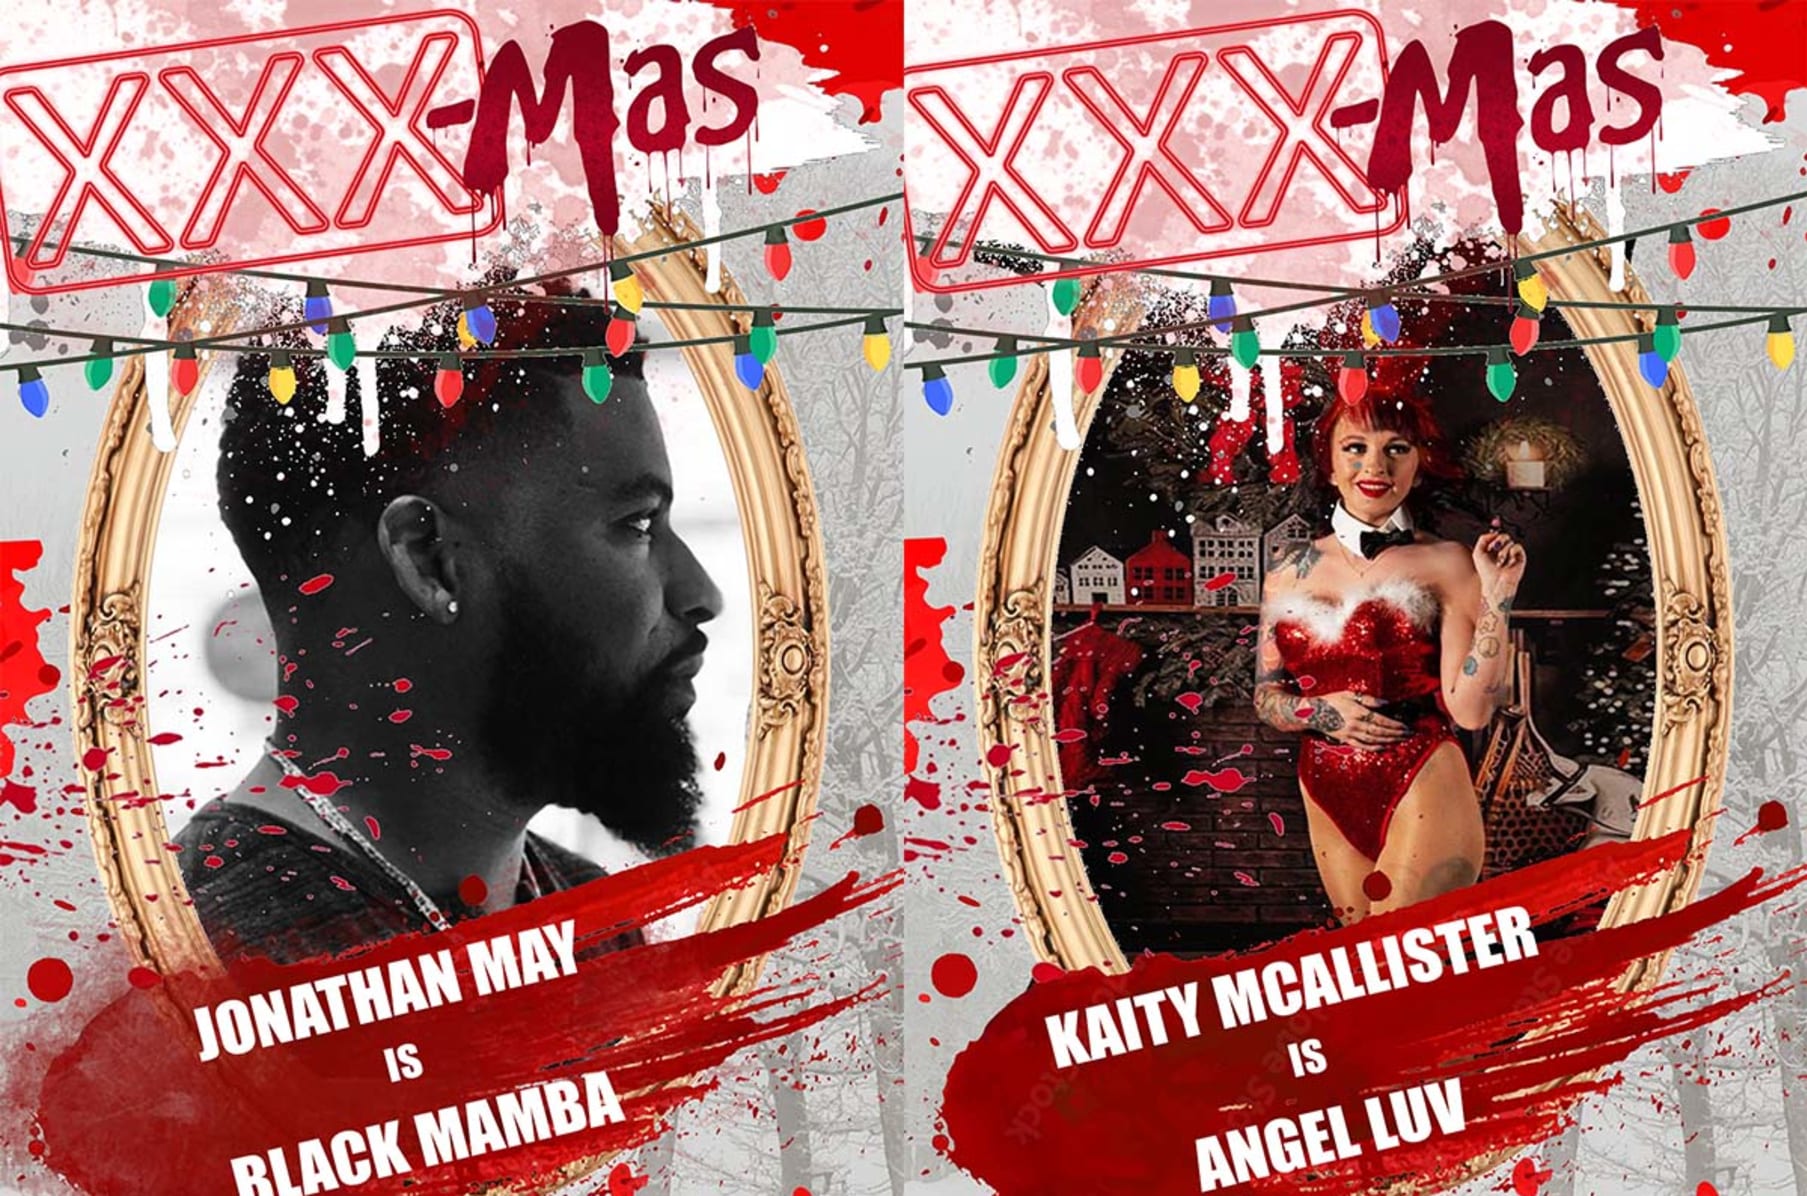 Sex Xxx Xx Video Mp4 - XXX-Mas - Christmas Slasher Film | Indiegogo